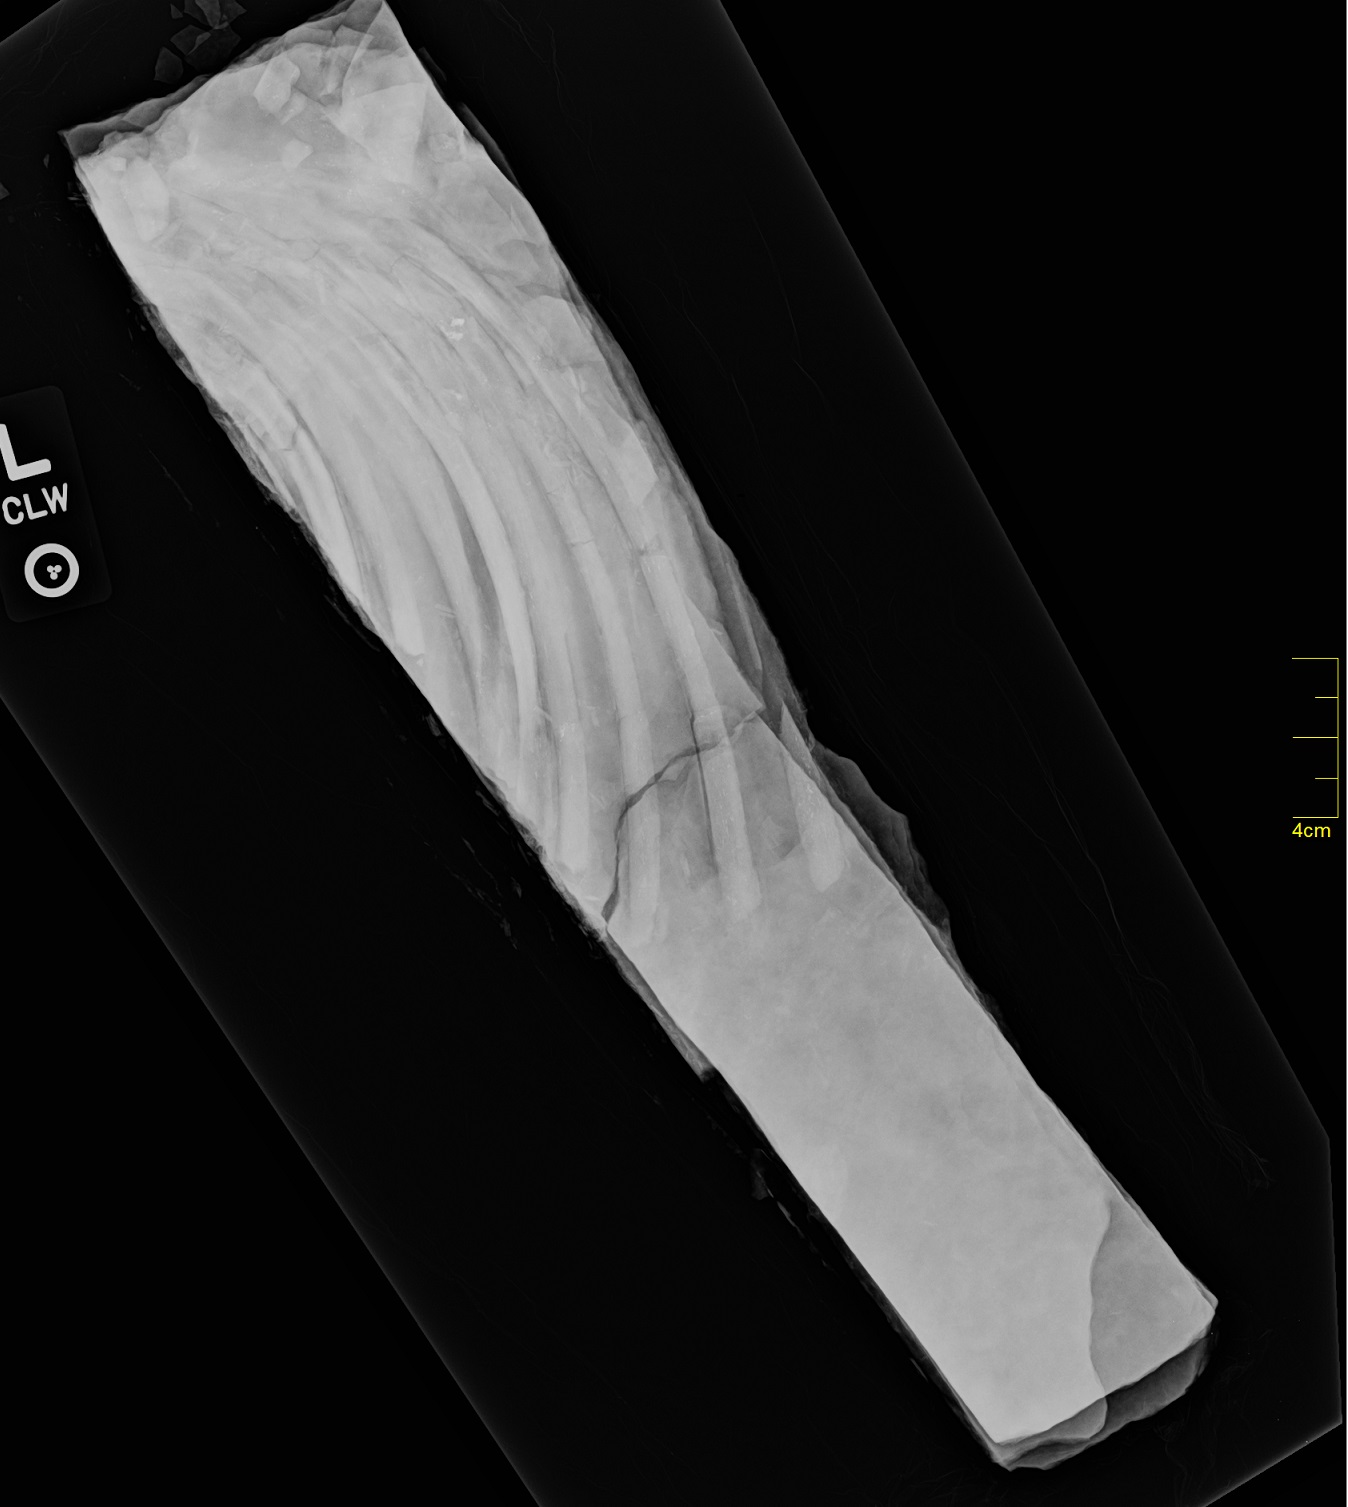 Tapiromorph rib cage in X-ray